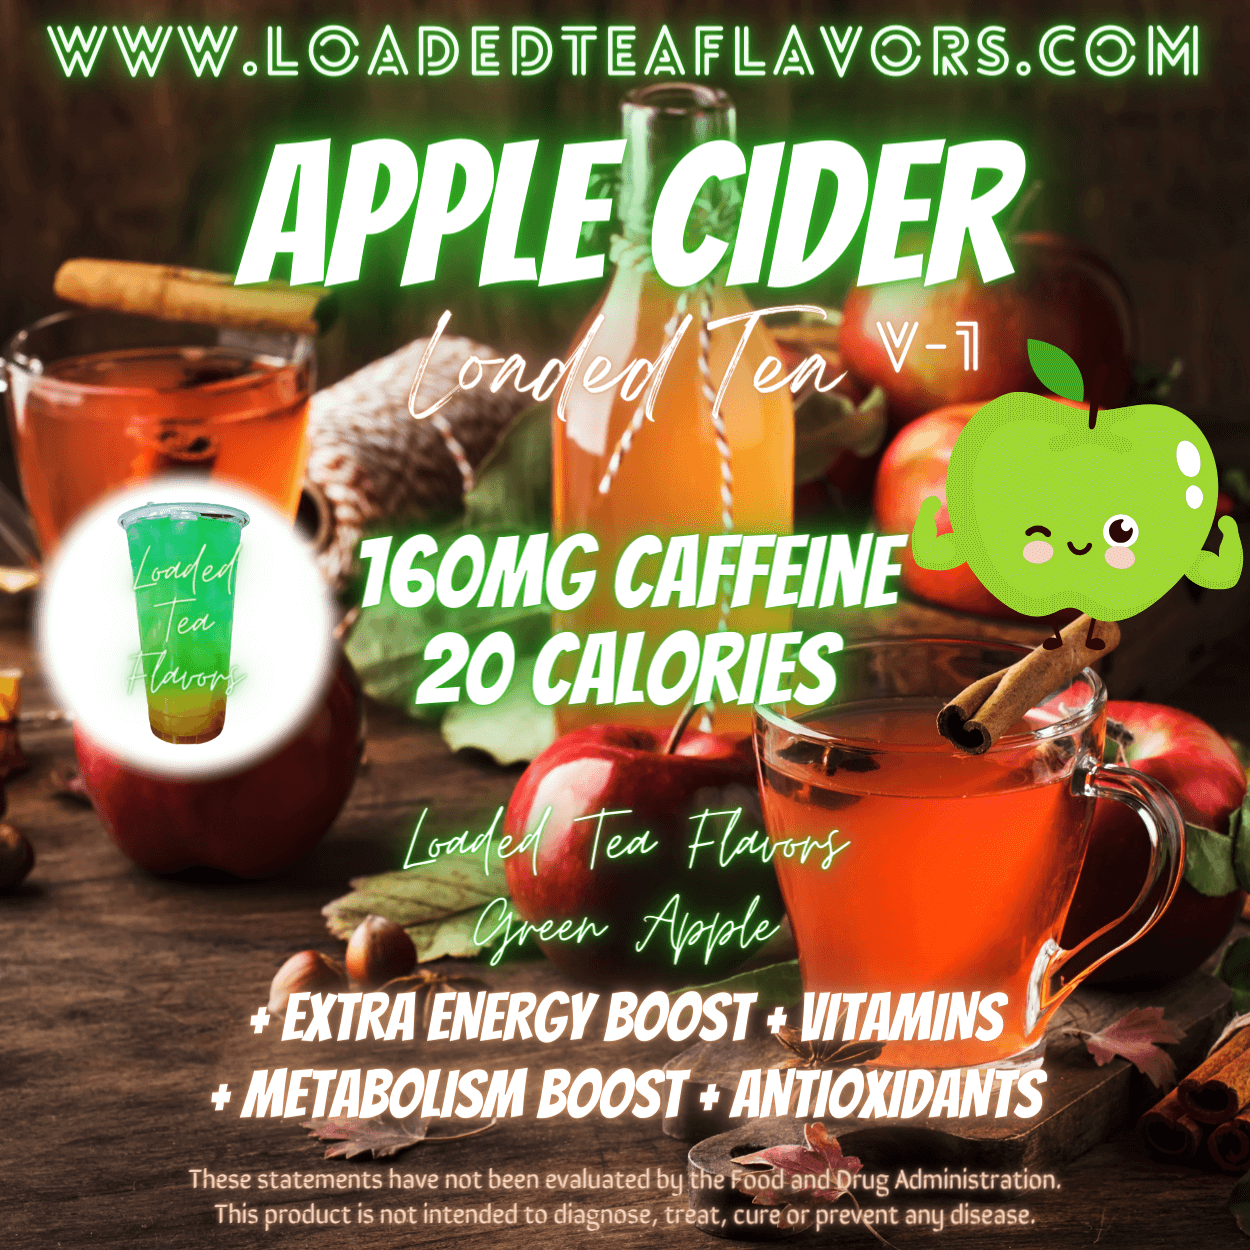 Apple Cider Flavored 🍏 Loaded Tea Recipe